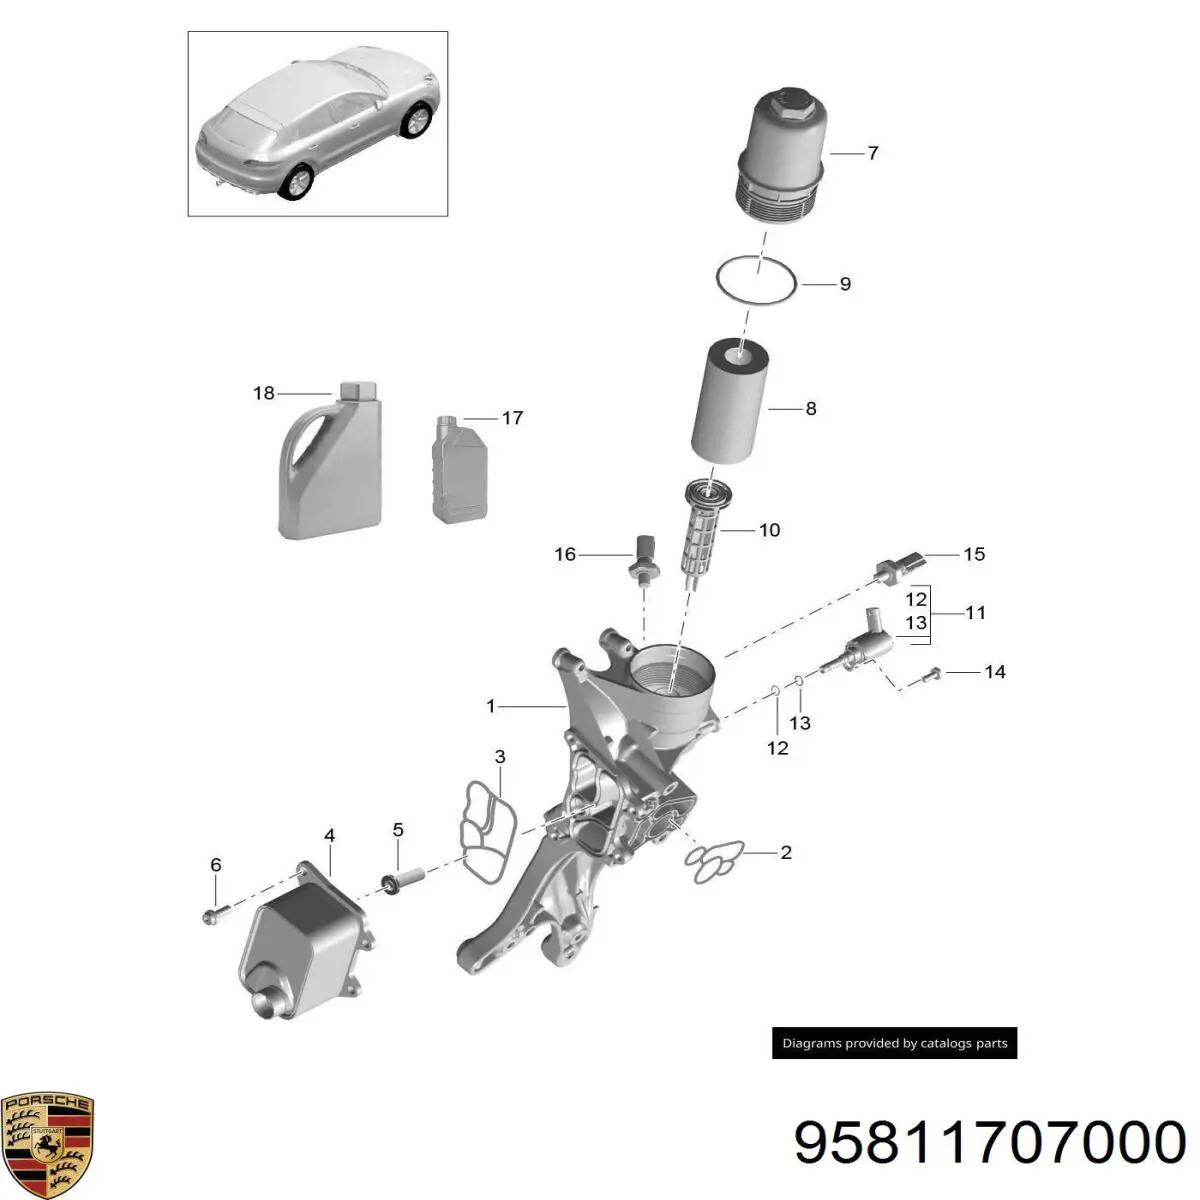 95811707000 Porsche vedante do radiador de óleo